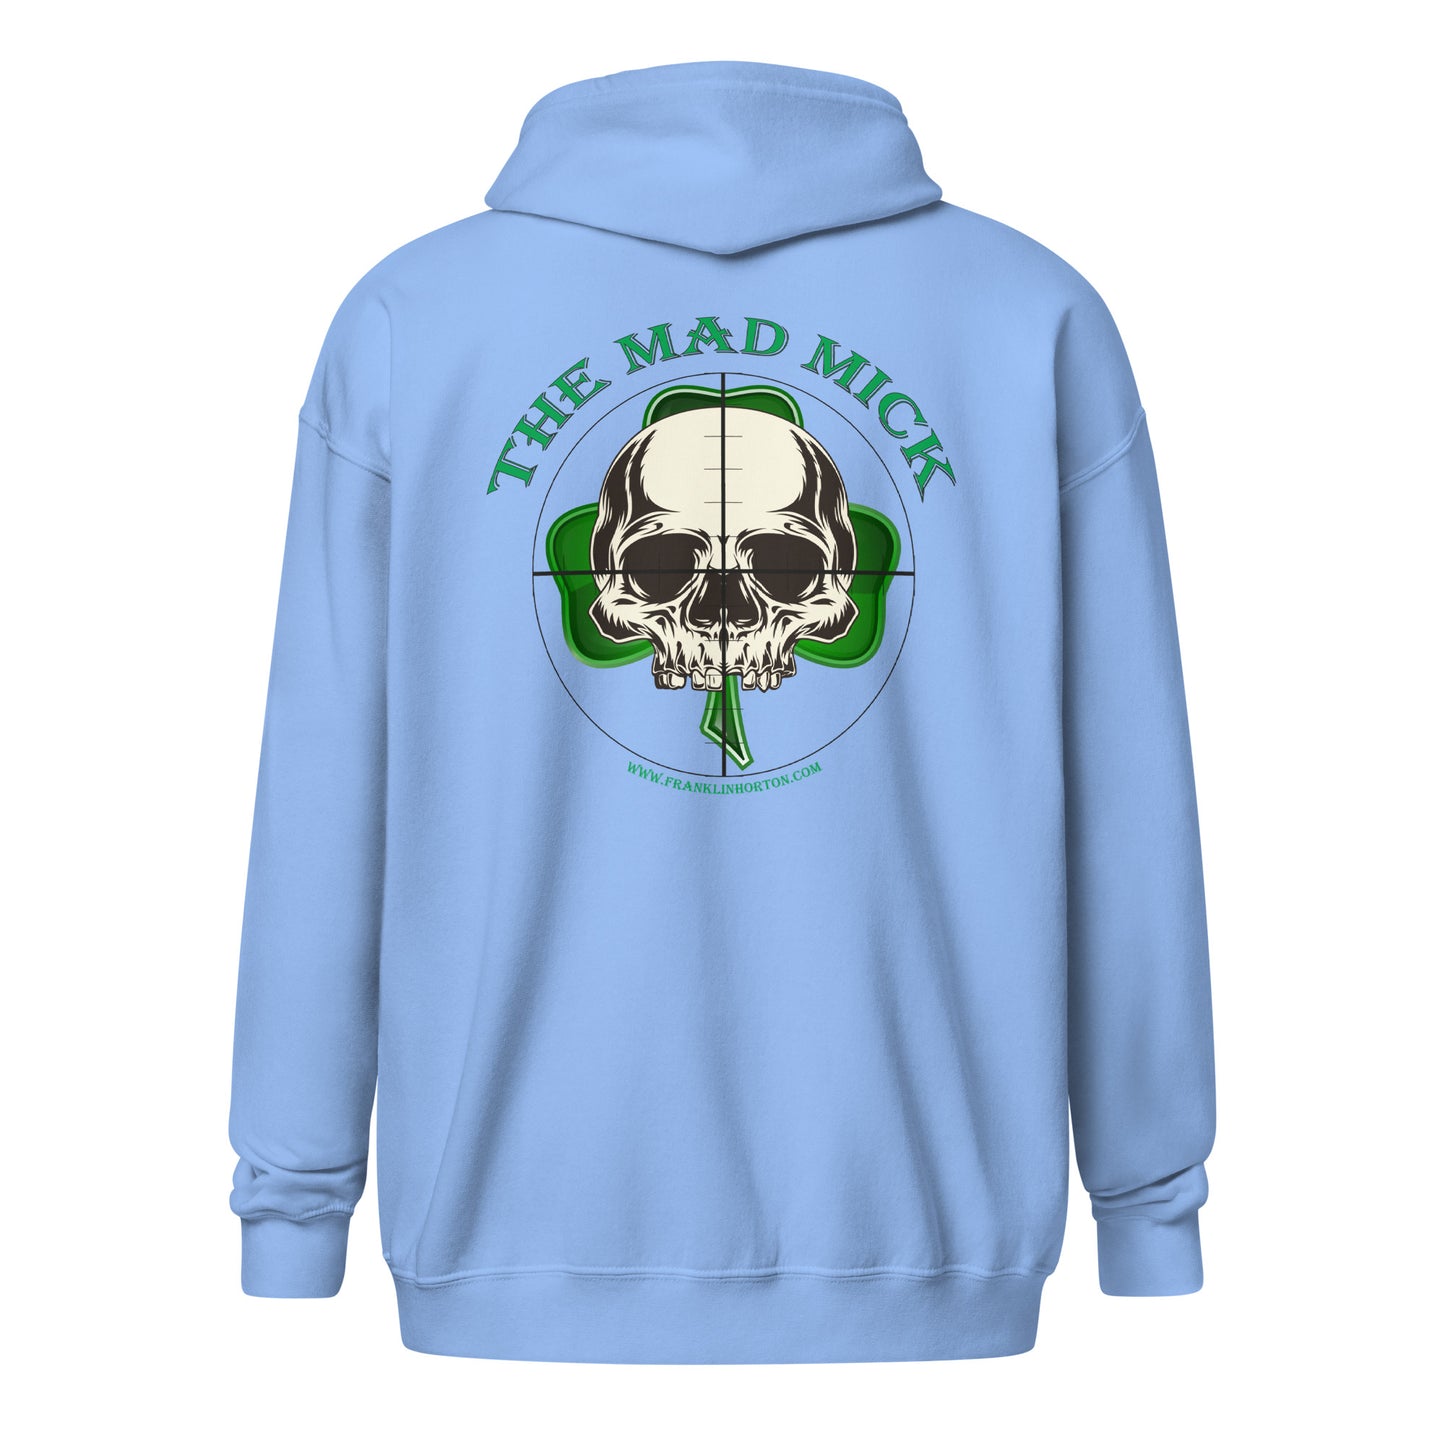 Mad Mick Logo zip hoodie